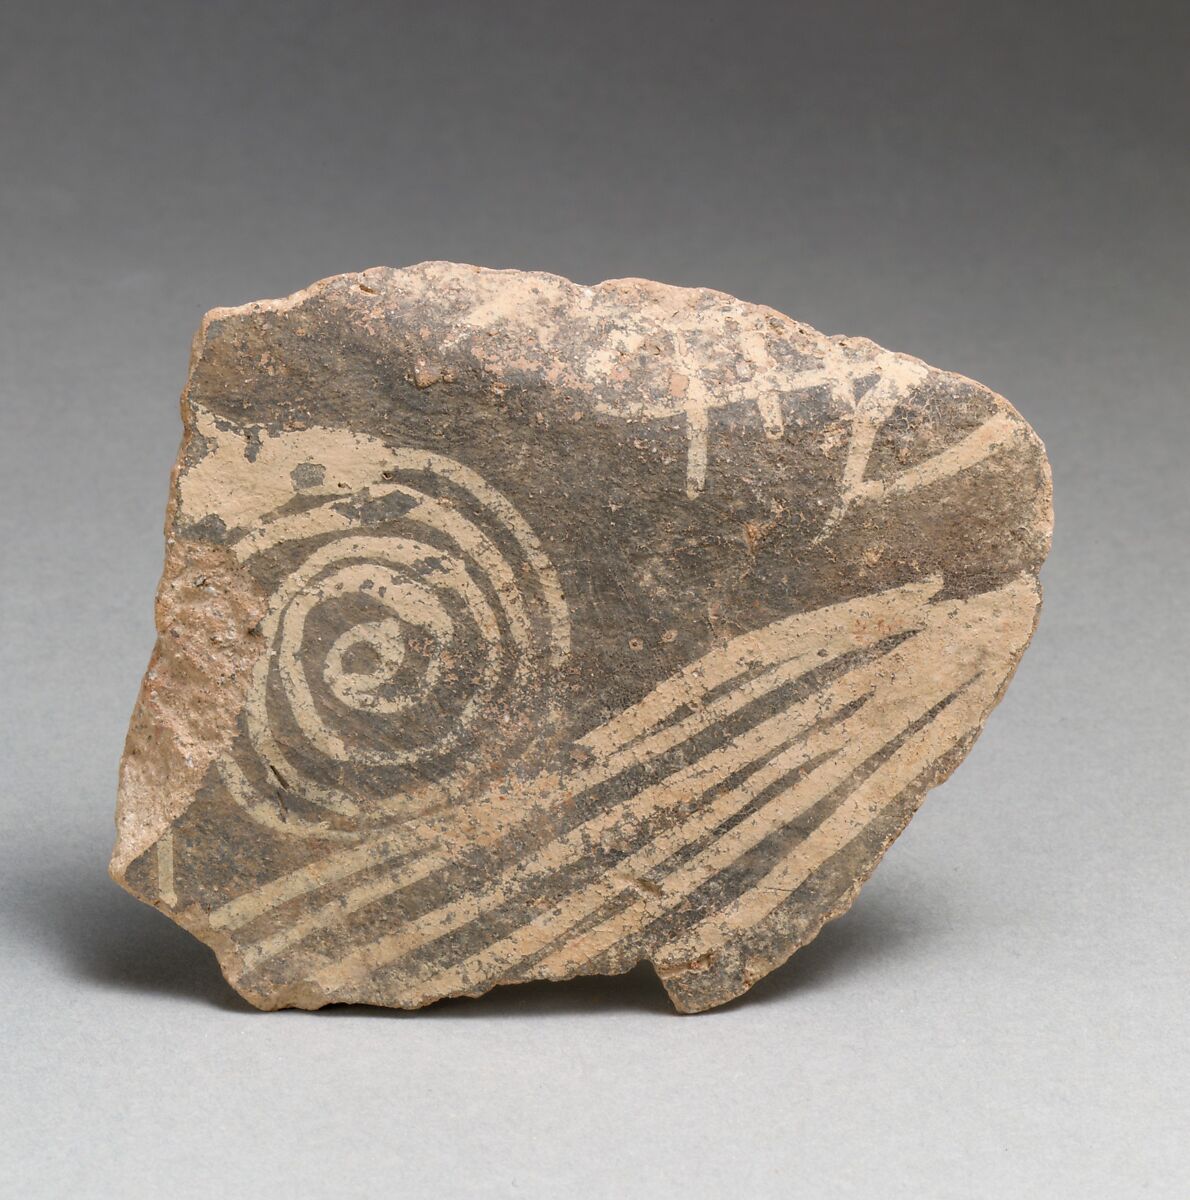 Terracotta vessel fragment with spiral and linear motifs, Terracotta, Minoan 